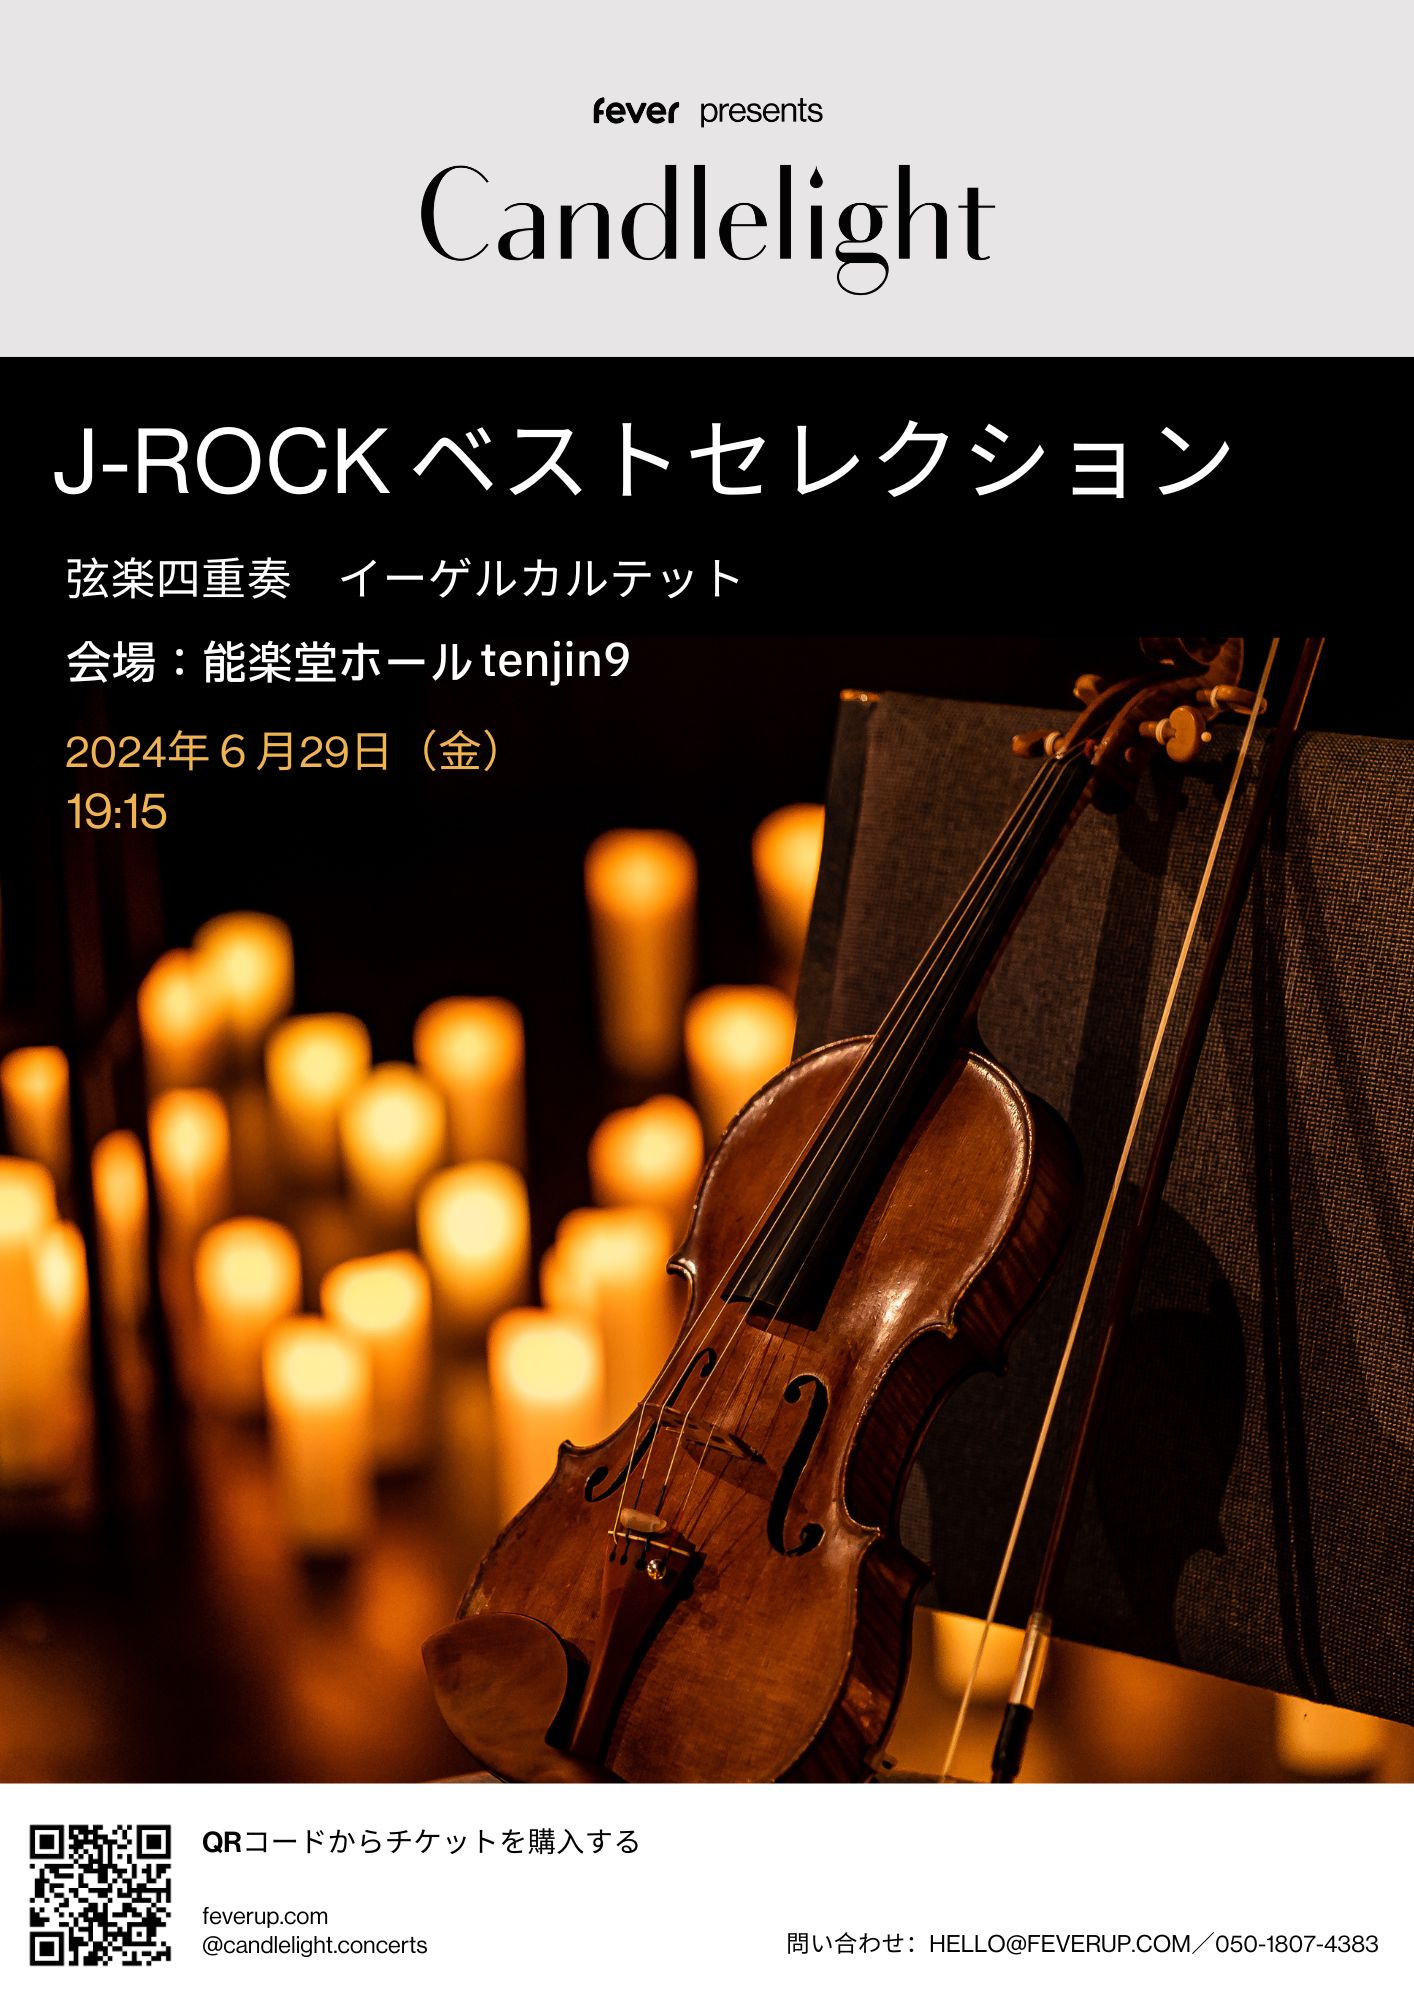 Candlelight: J-ROCK ベストセレクション at 能楽堂ホールtenjin9